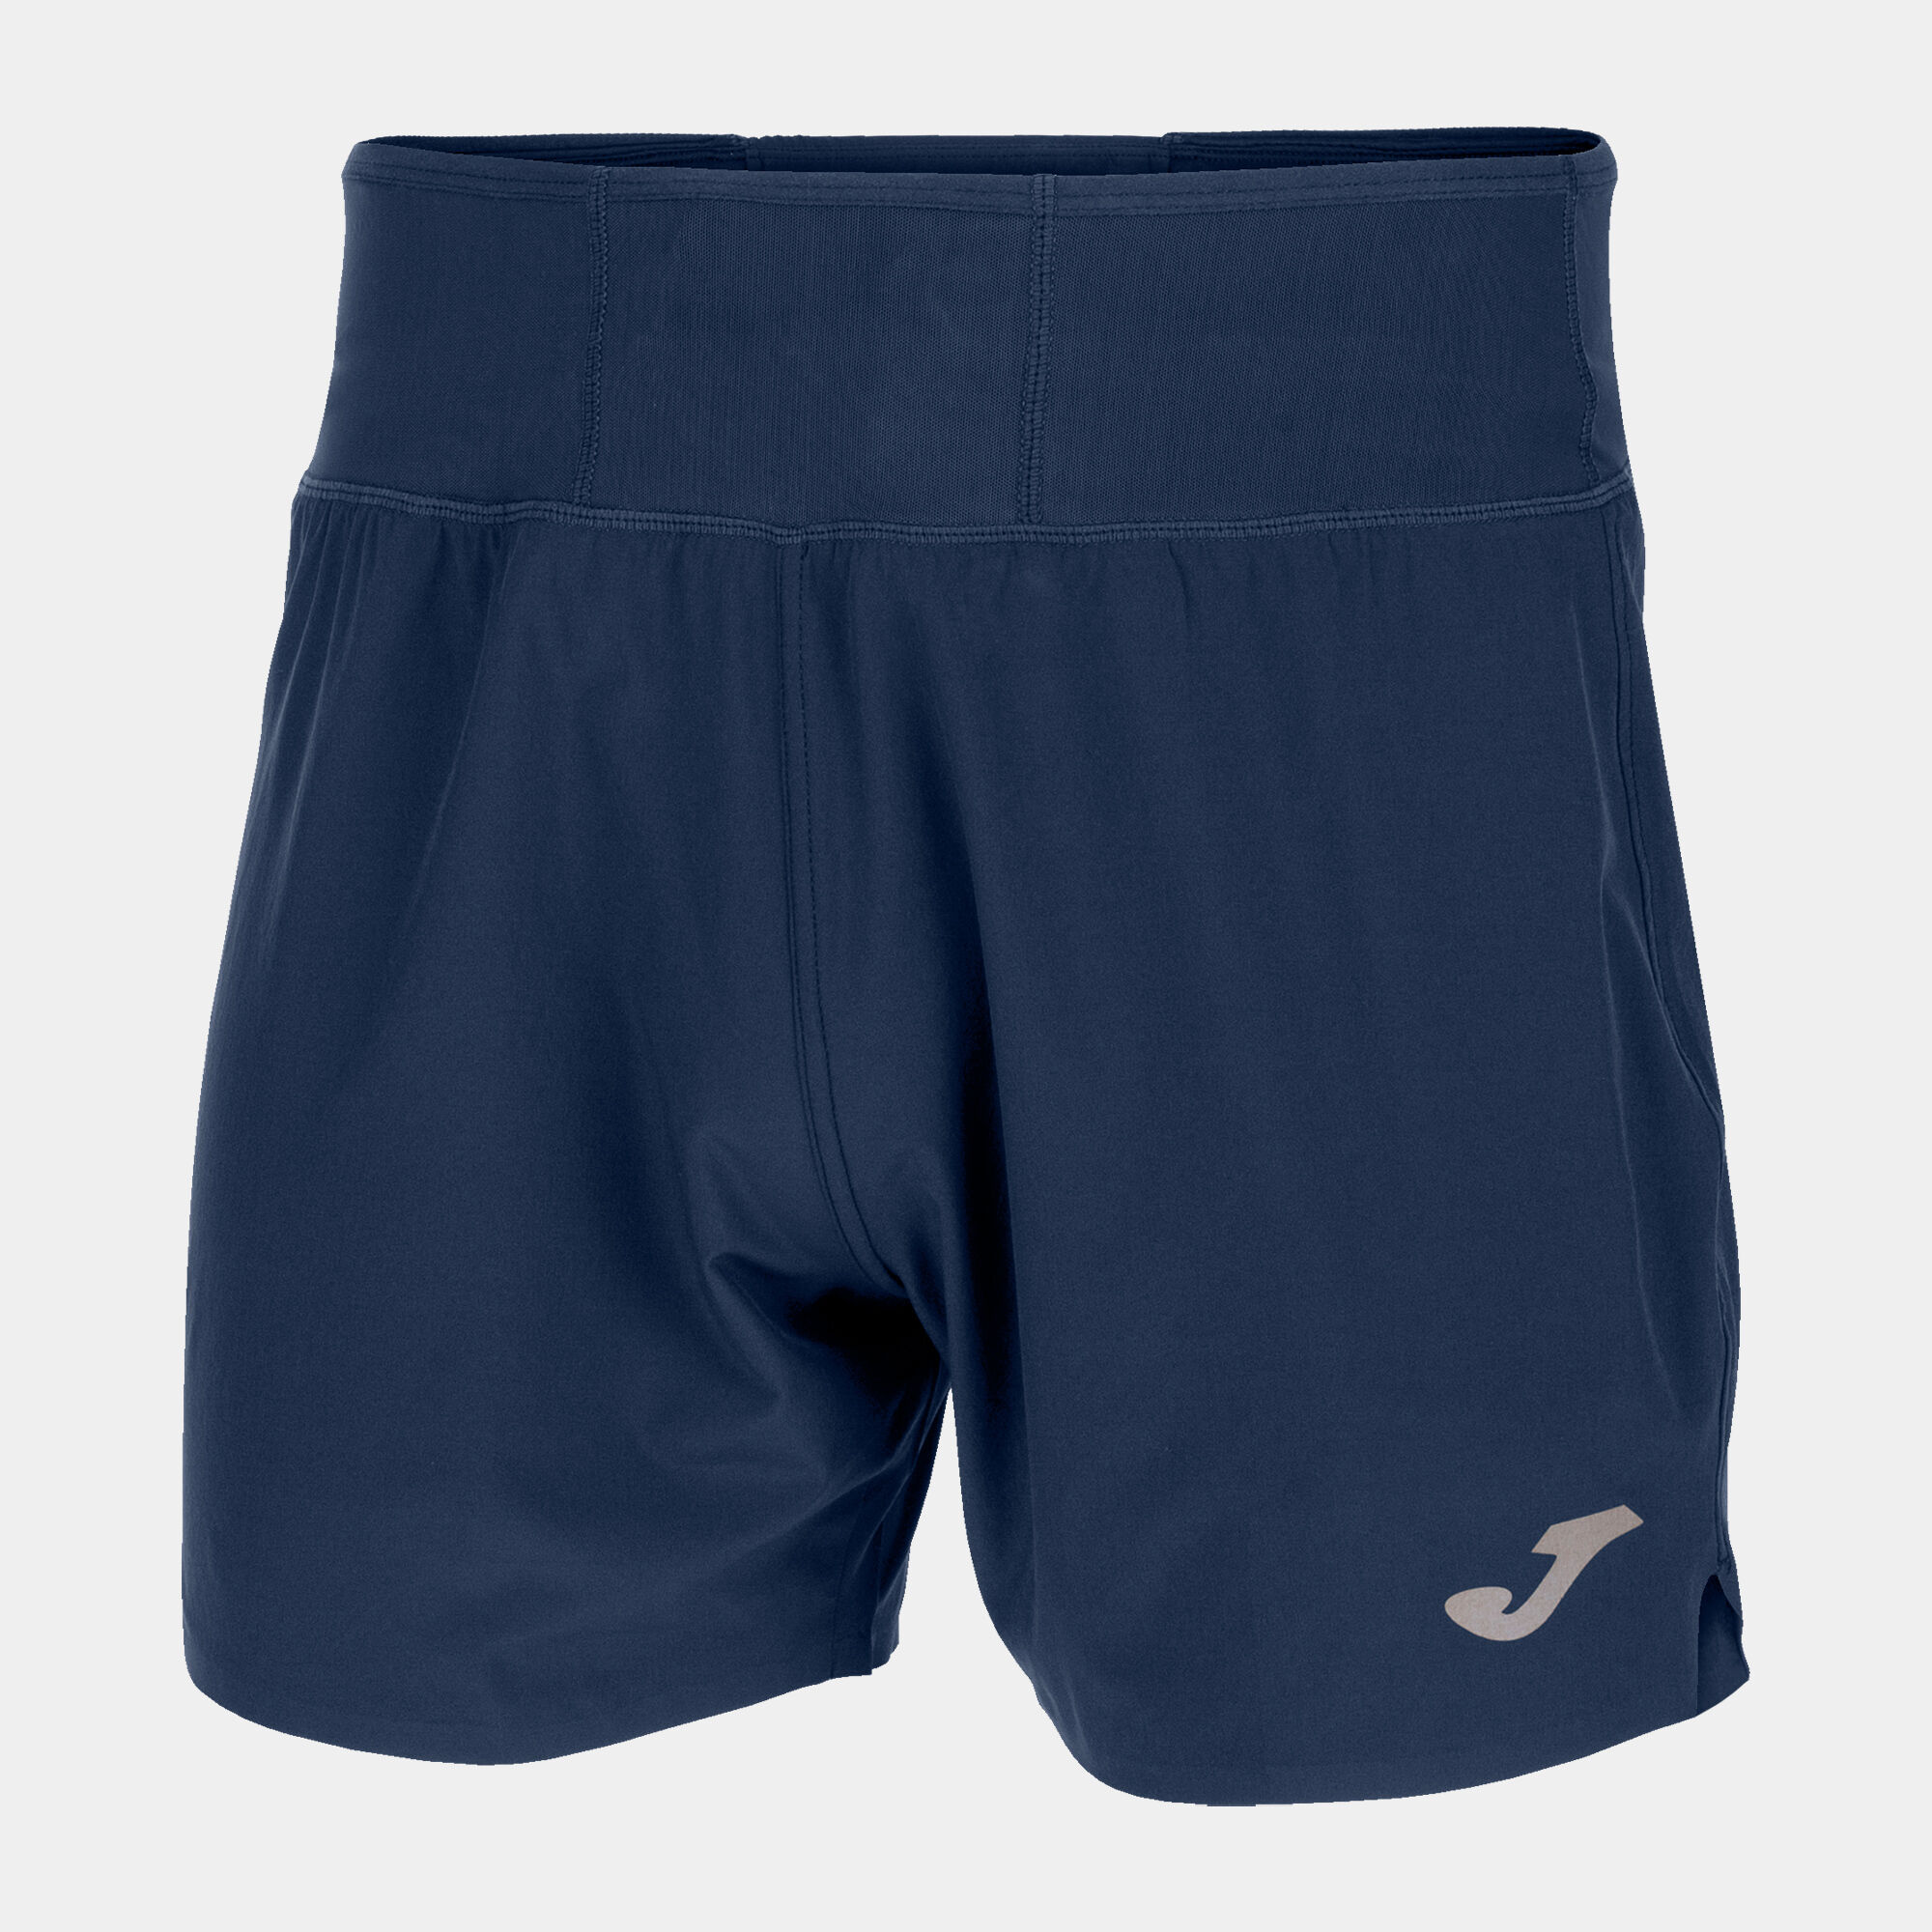 Shorts man R-Combi navy blue